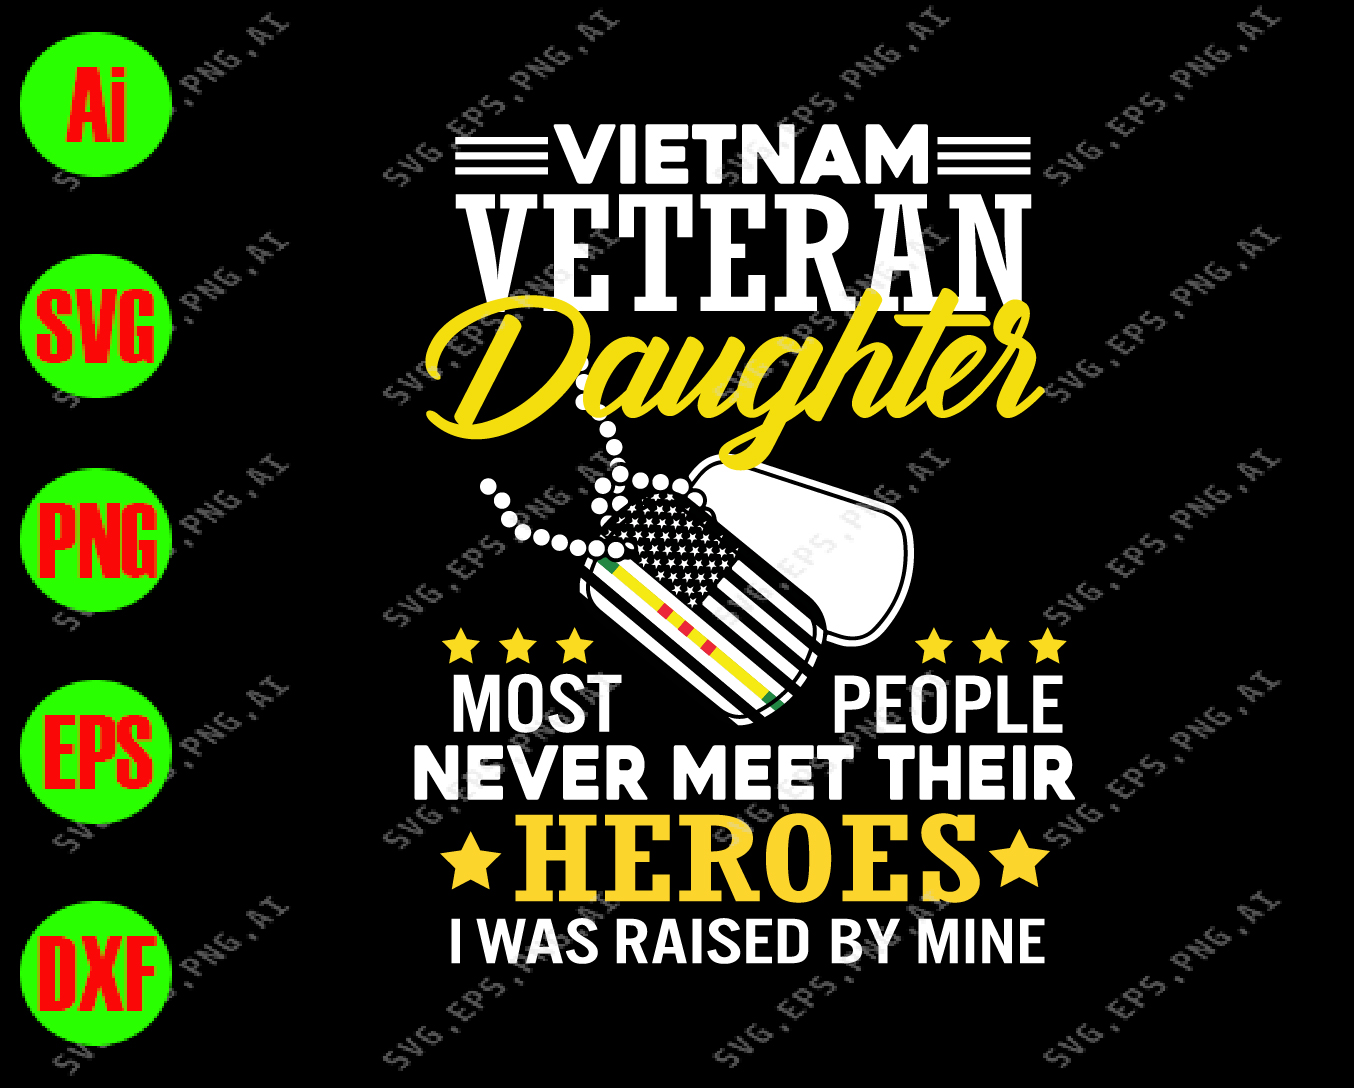 Vietnam Veteran Daughter Most People Never Meet Their Heroes I Was Raised By Mine Svg Dxf Eps Png Digital Download Designbtf Com